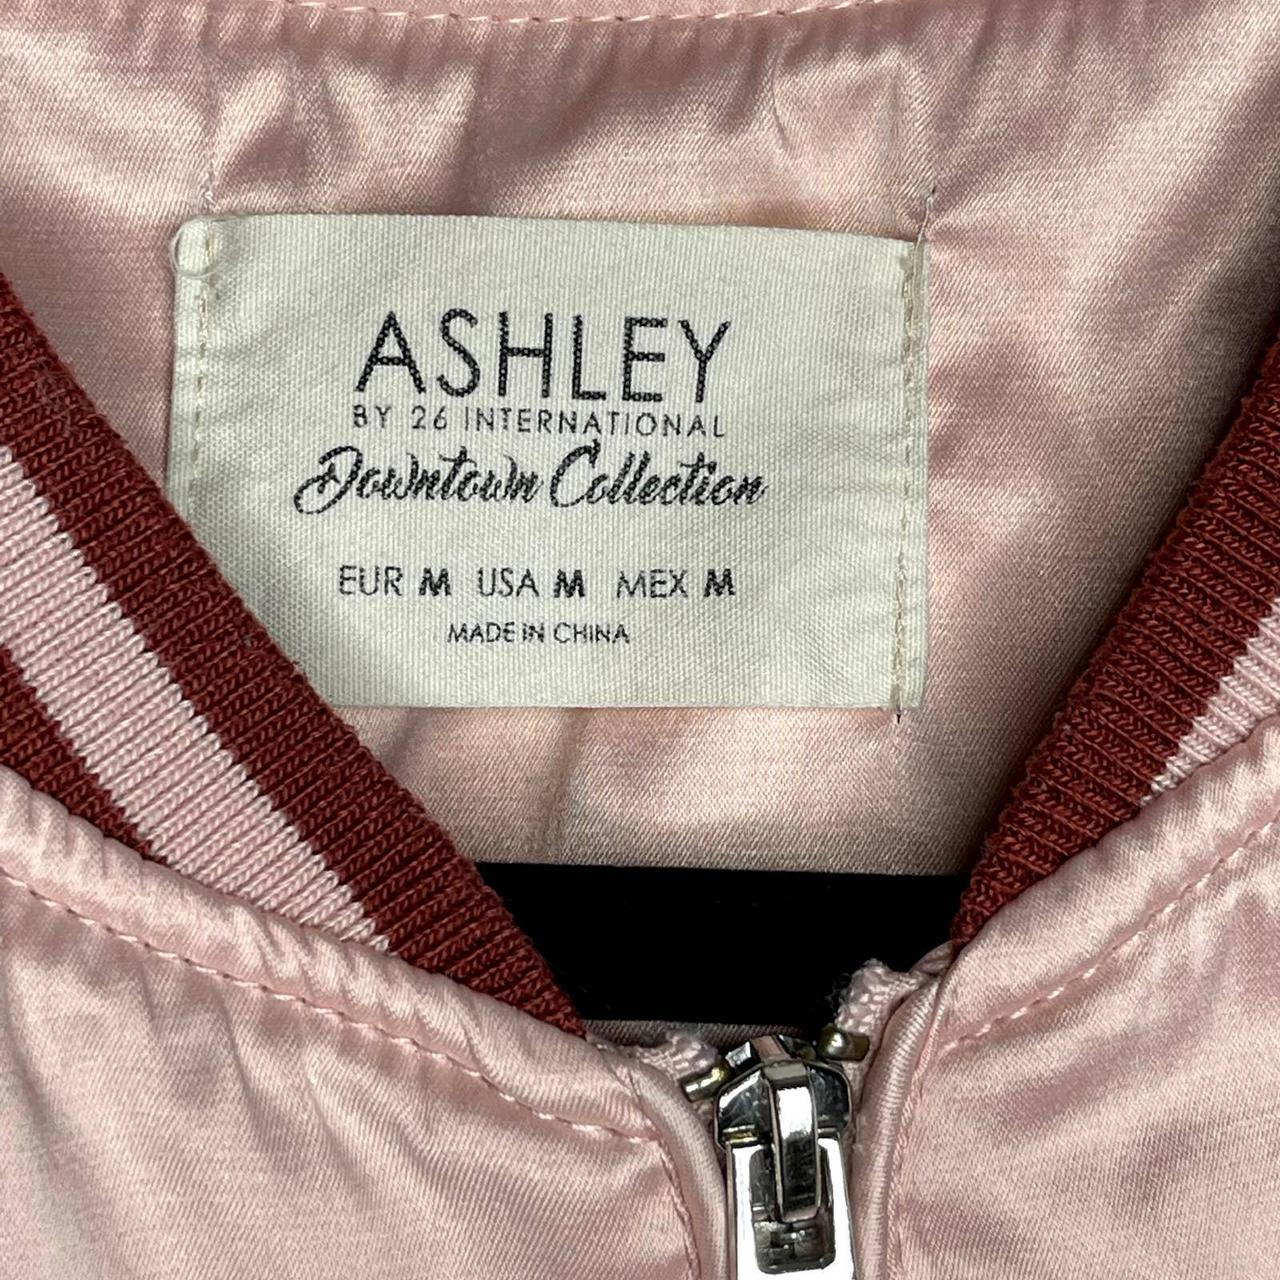 Ashley by 26 International Bomber Jacket Size... - Depop